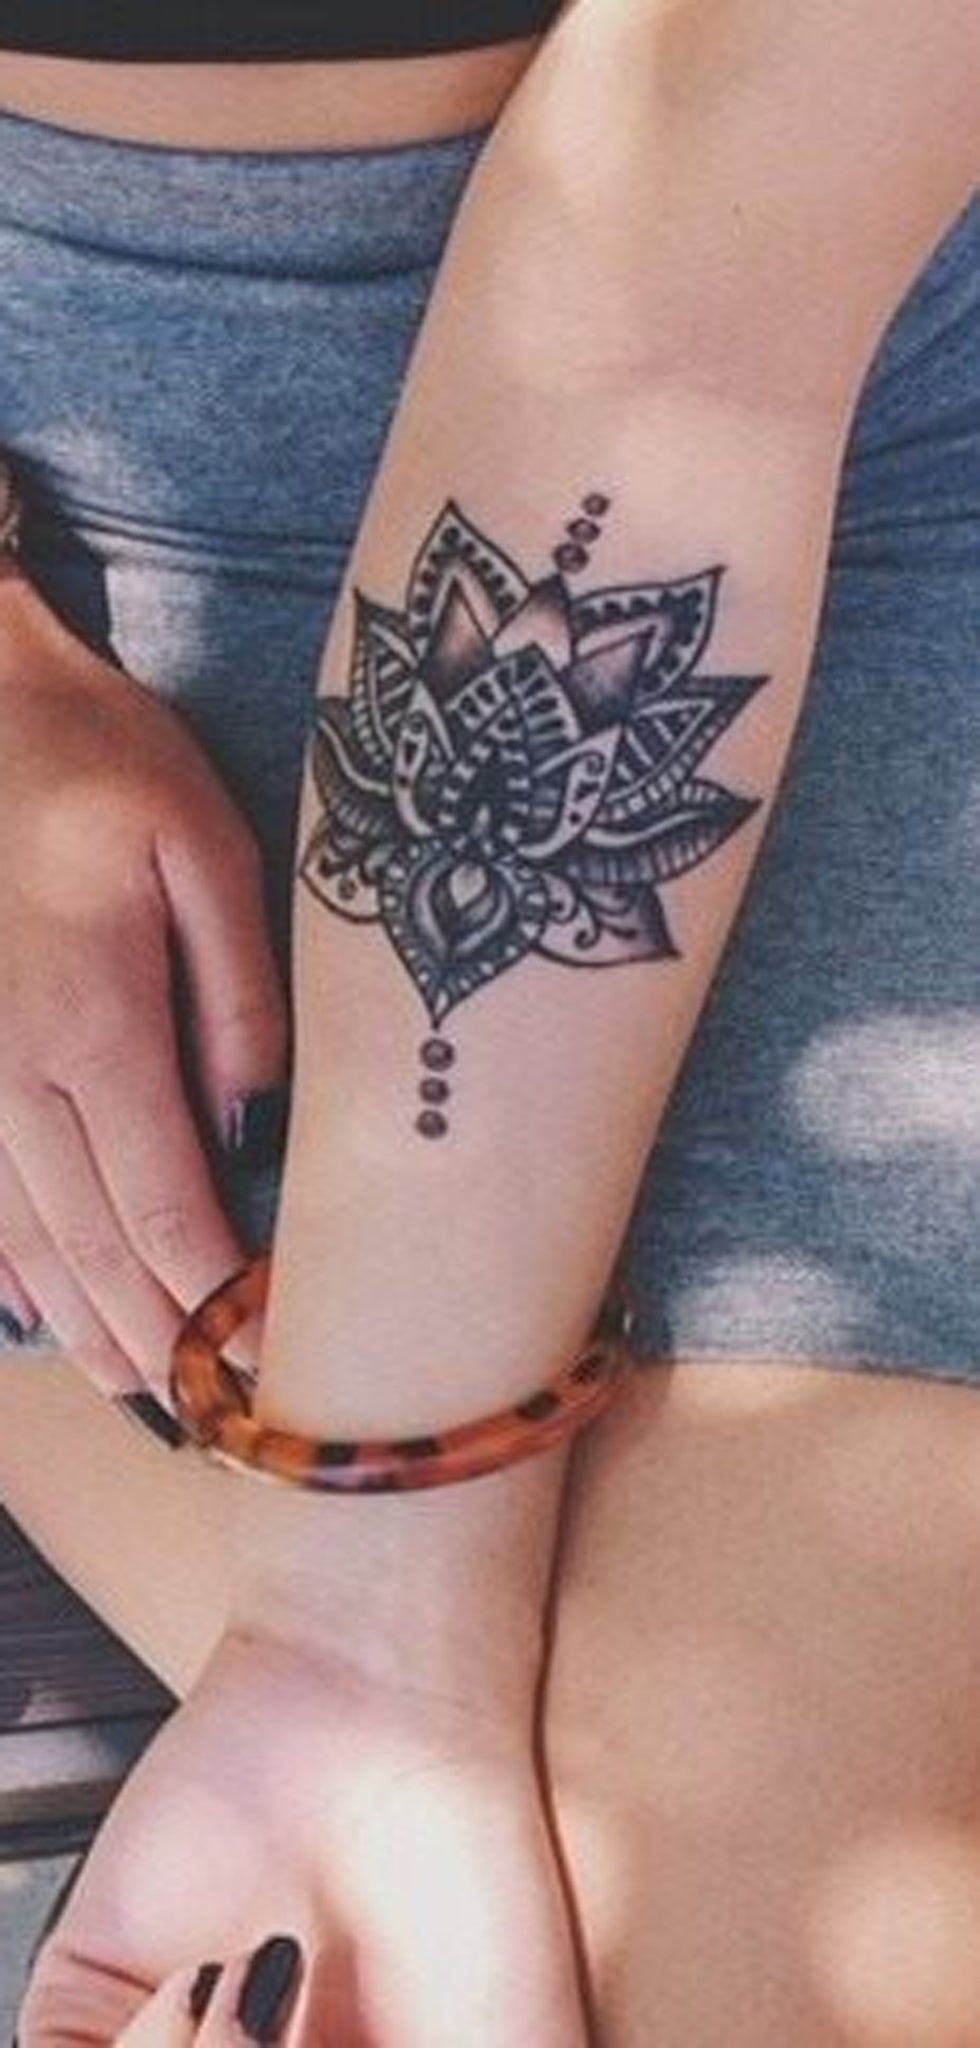 Black Lotus Chandelier Forearm Tattoo Ideas for Women - Tribal Boho Arm Sleeve Tat -  ideas del tatuaje del antebrazo de la lámpara de loto - www.MyBodiArt.com